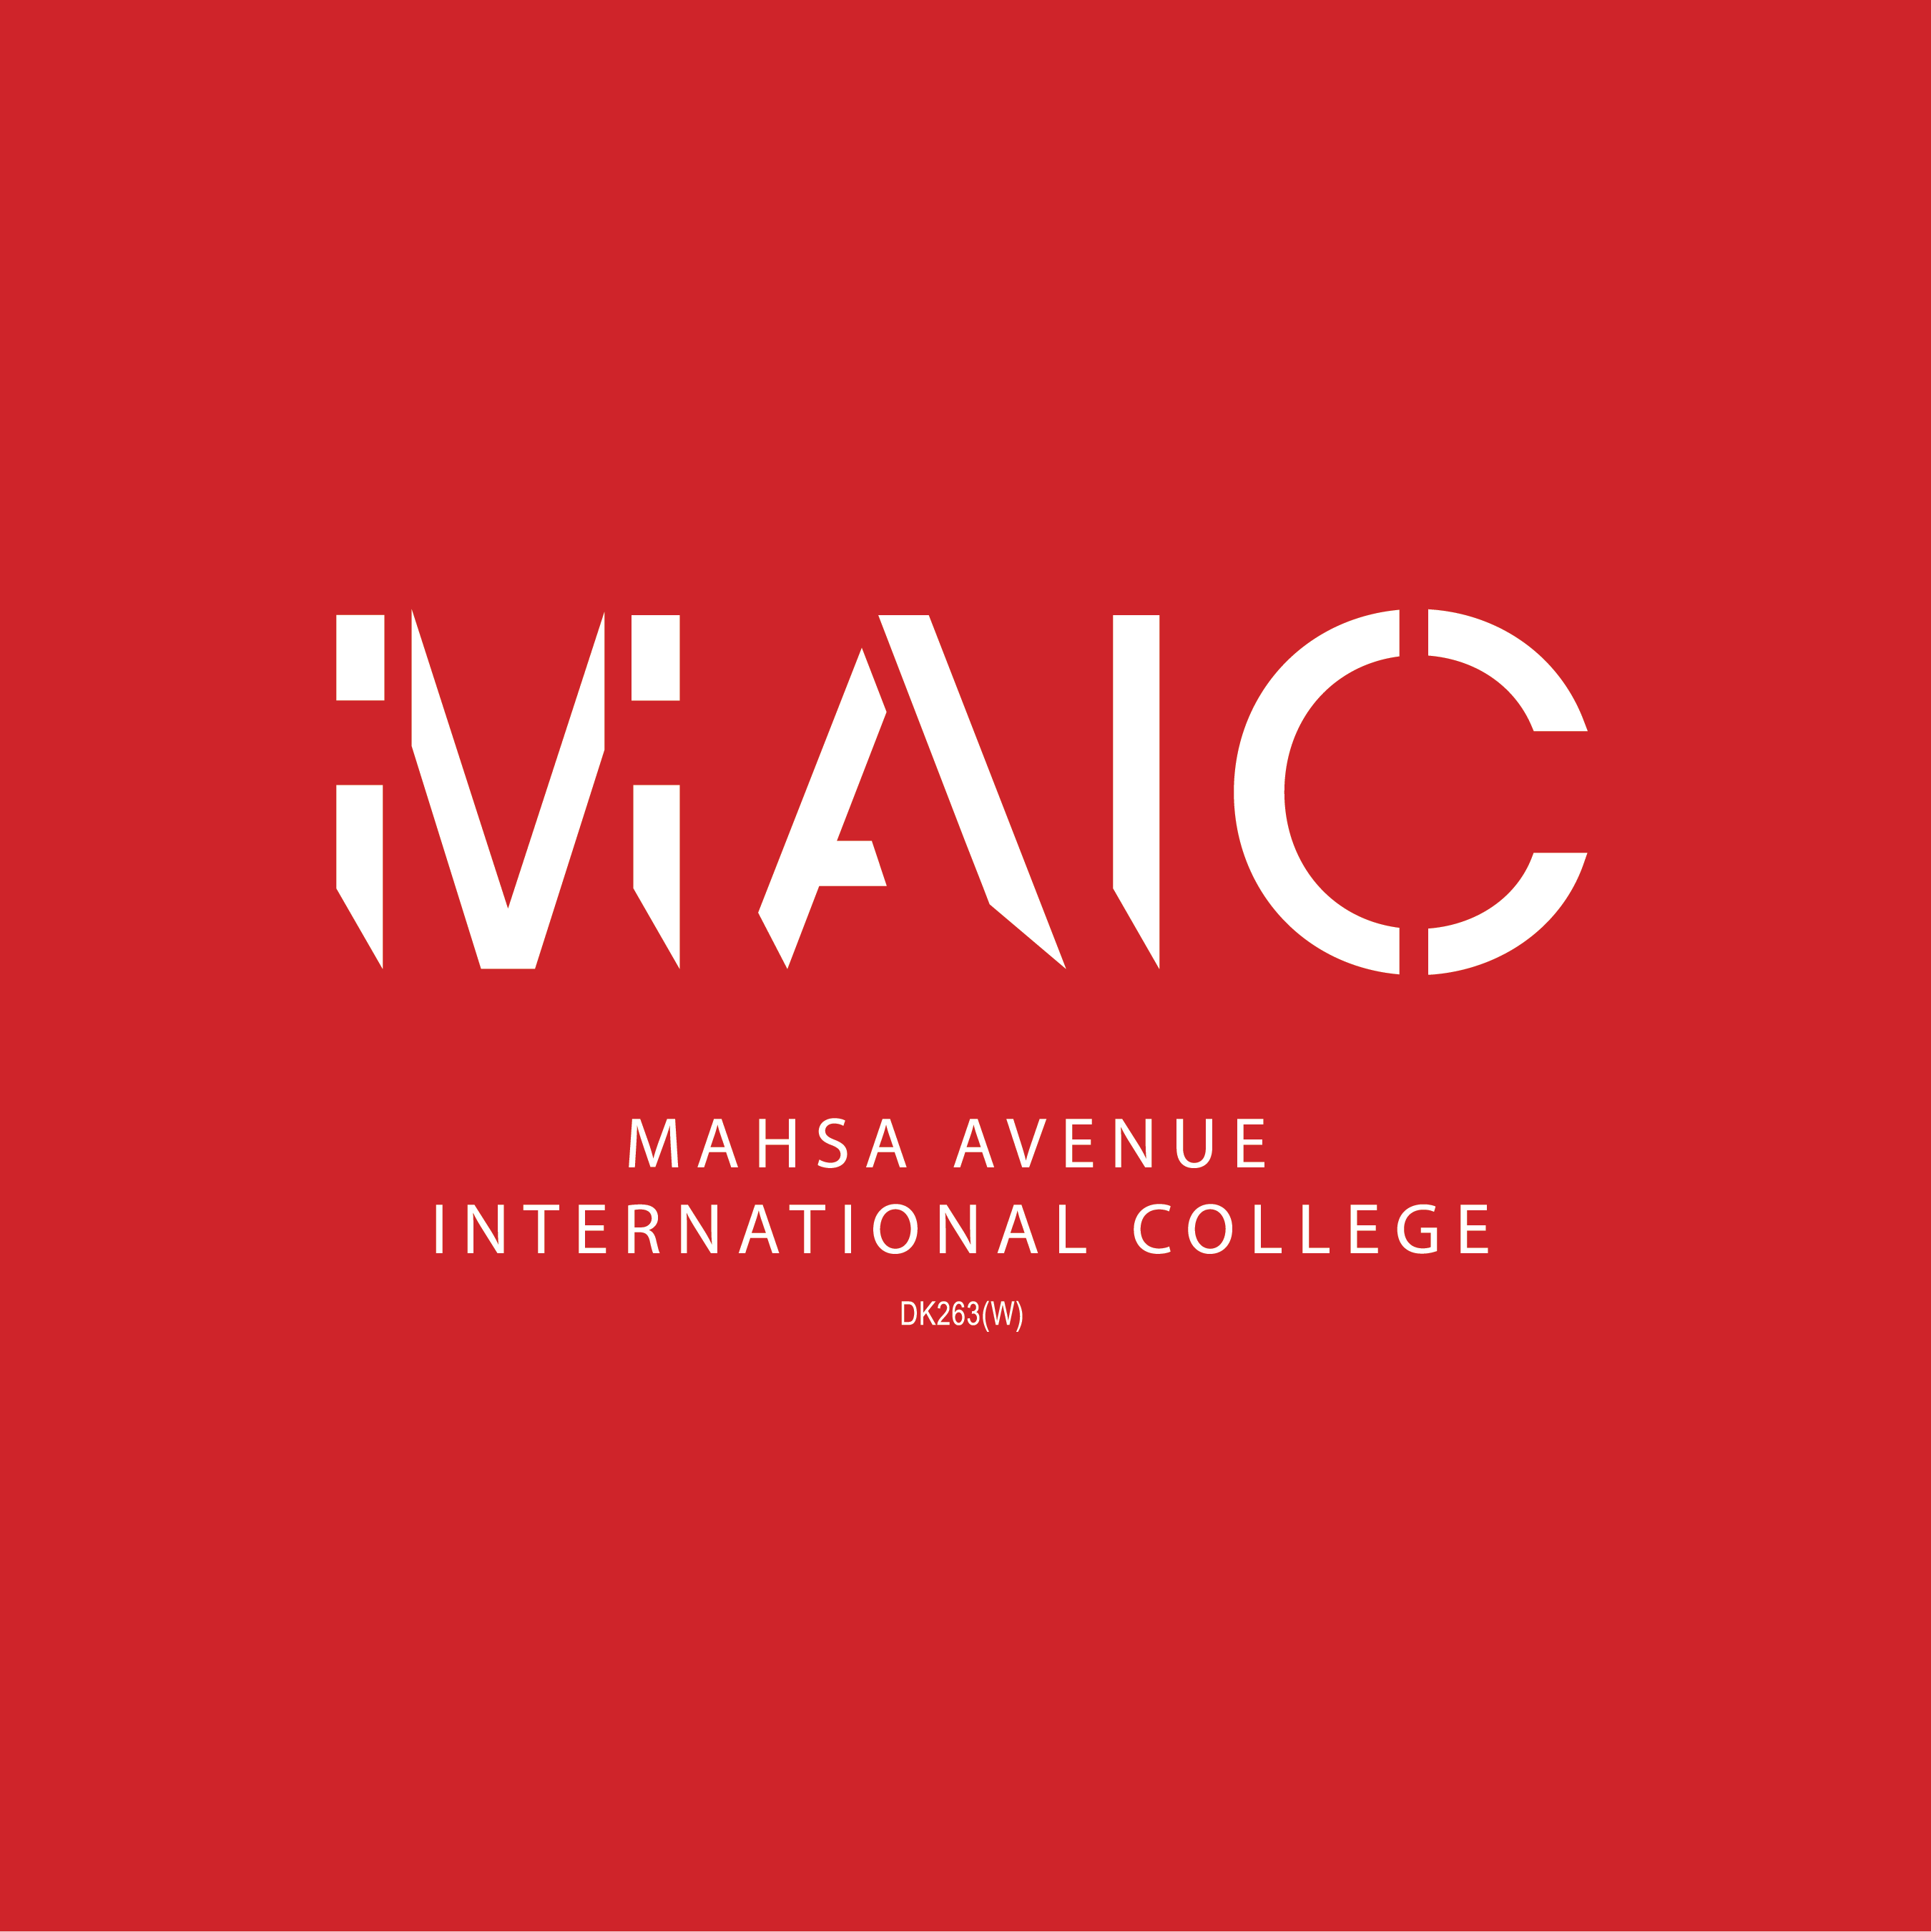 MAHSA Avenue International College: MAIC